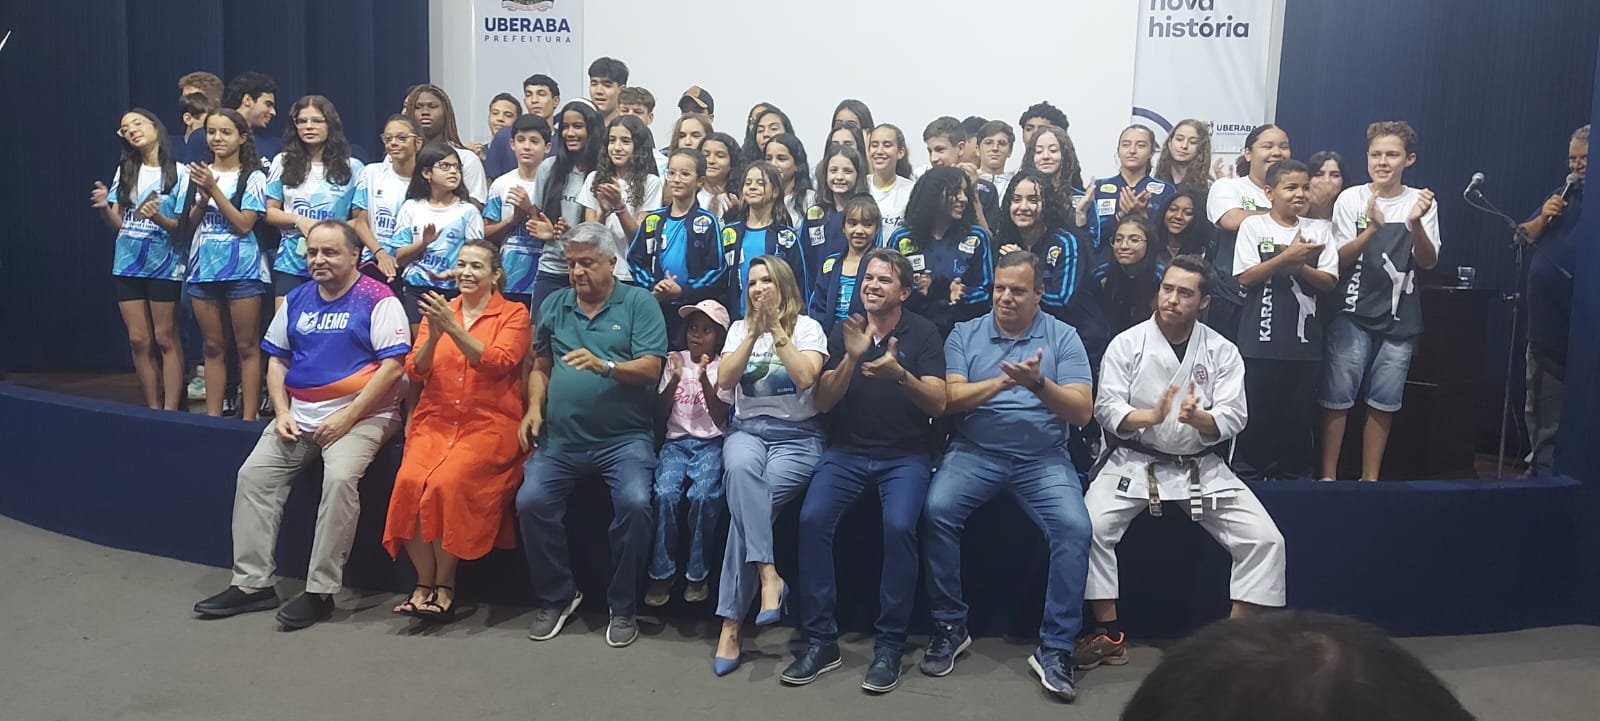 Agência Minas Gerais  Uberaba receberá etapa estadual do Jemg 2023